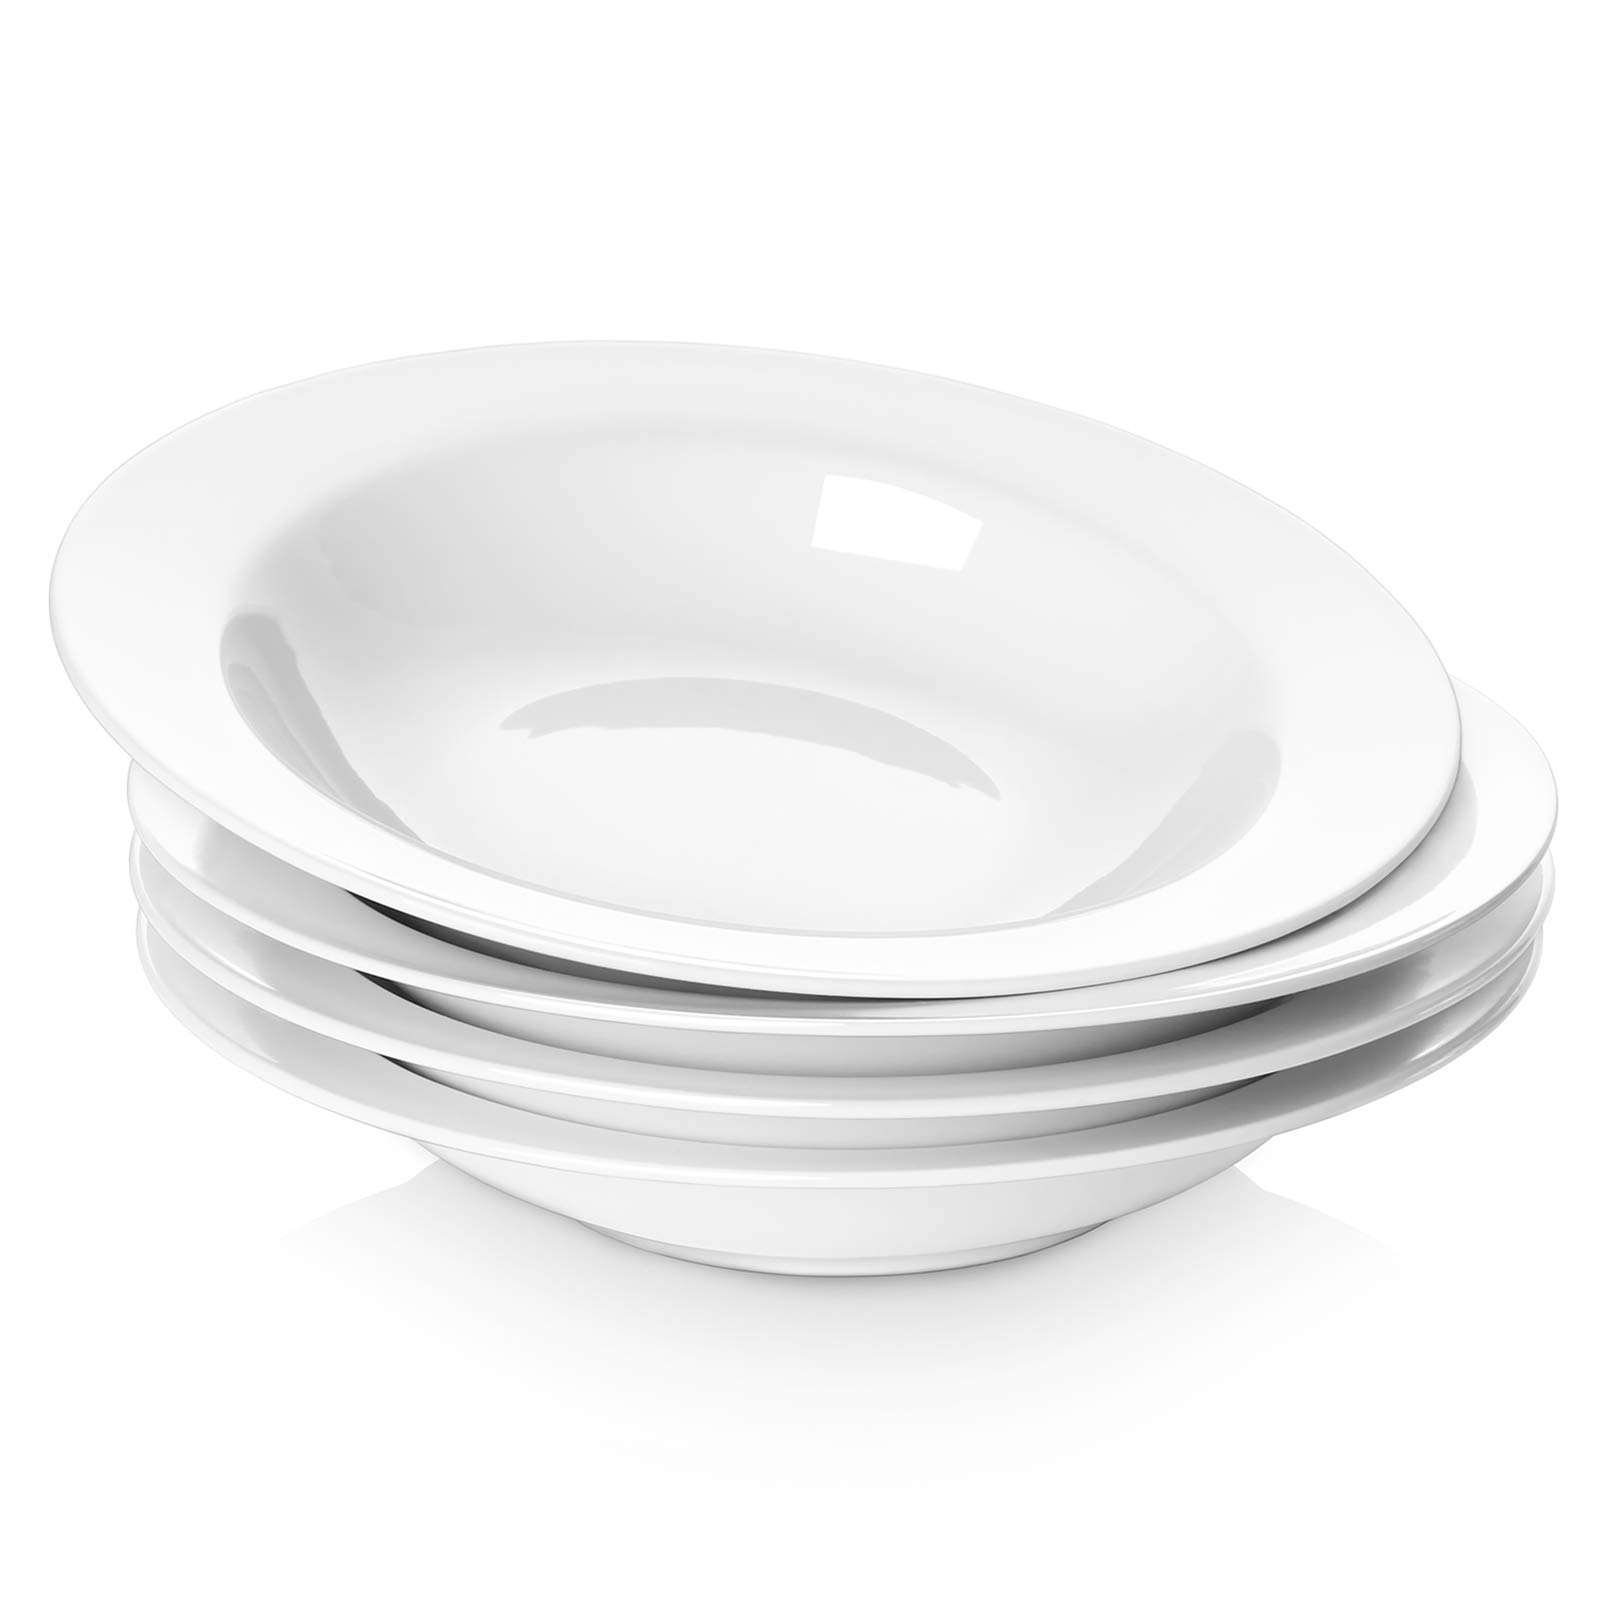 Y YHY Pasta Bowls and Plates,20 Ounces White Soup Bowl Set of 4, Porcelain Bowl Set for Salad, Microwave Oven safe